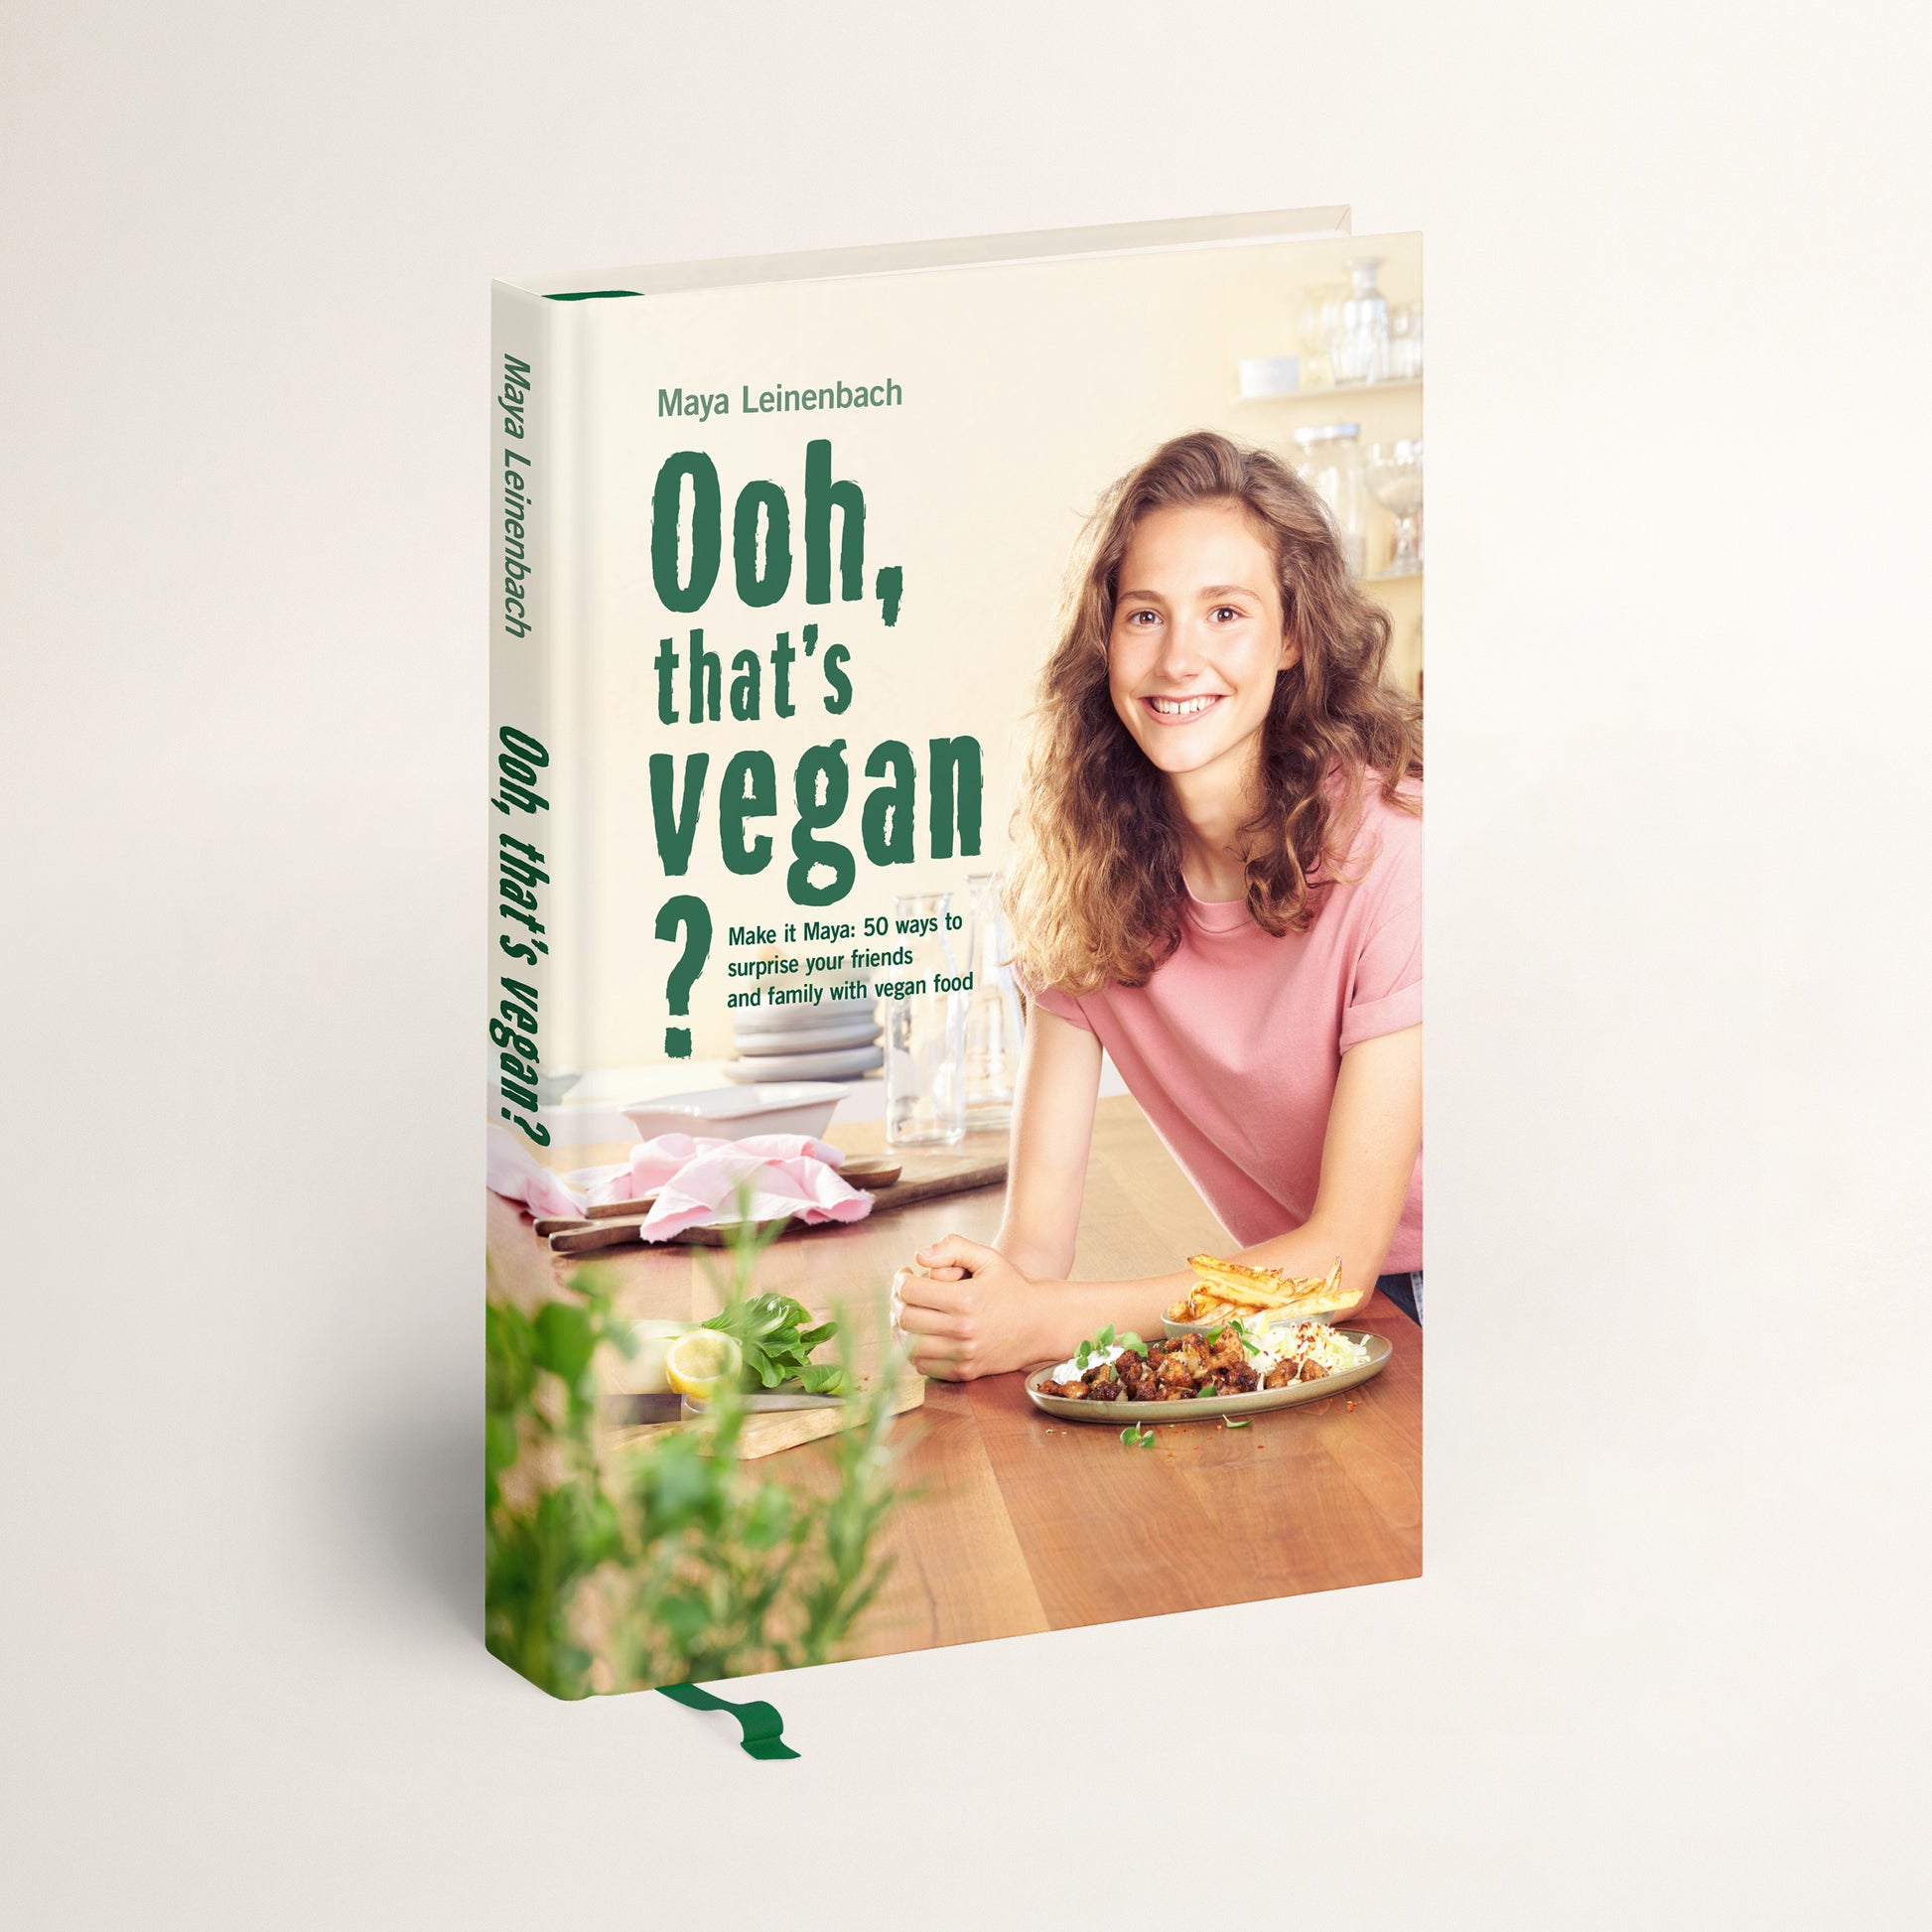 vegan cookbook Maya Leinenbach fitgreenmind at t5c.shop